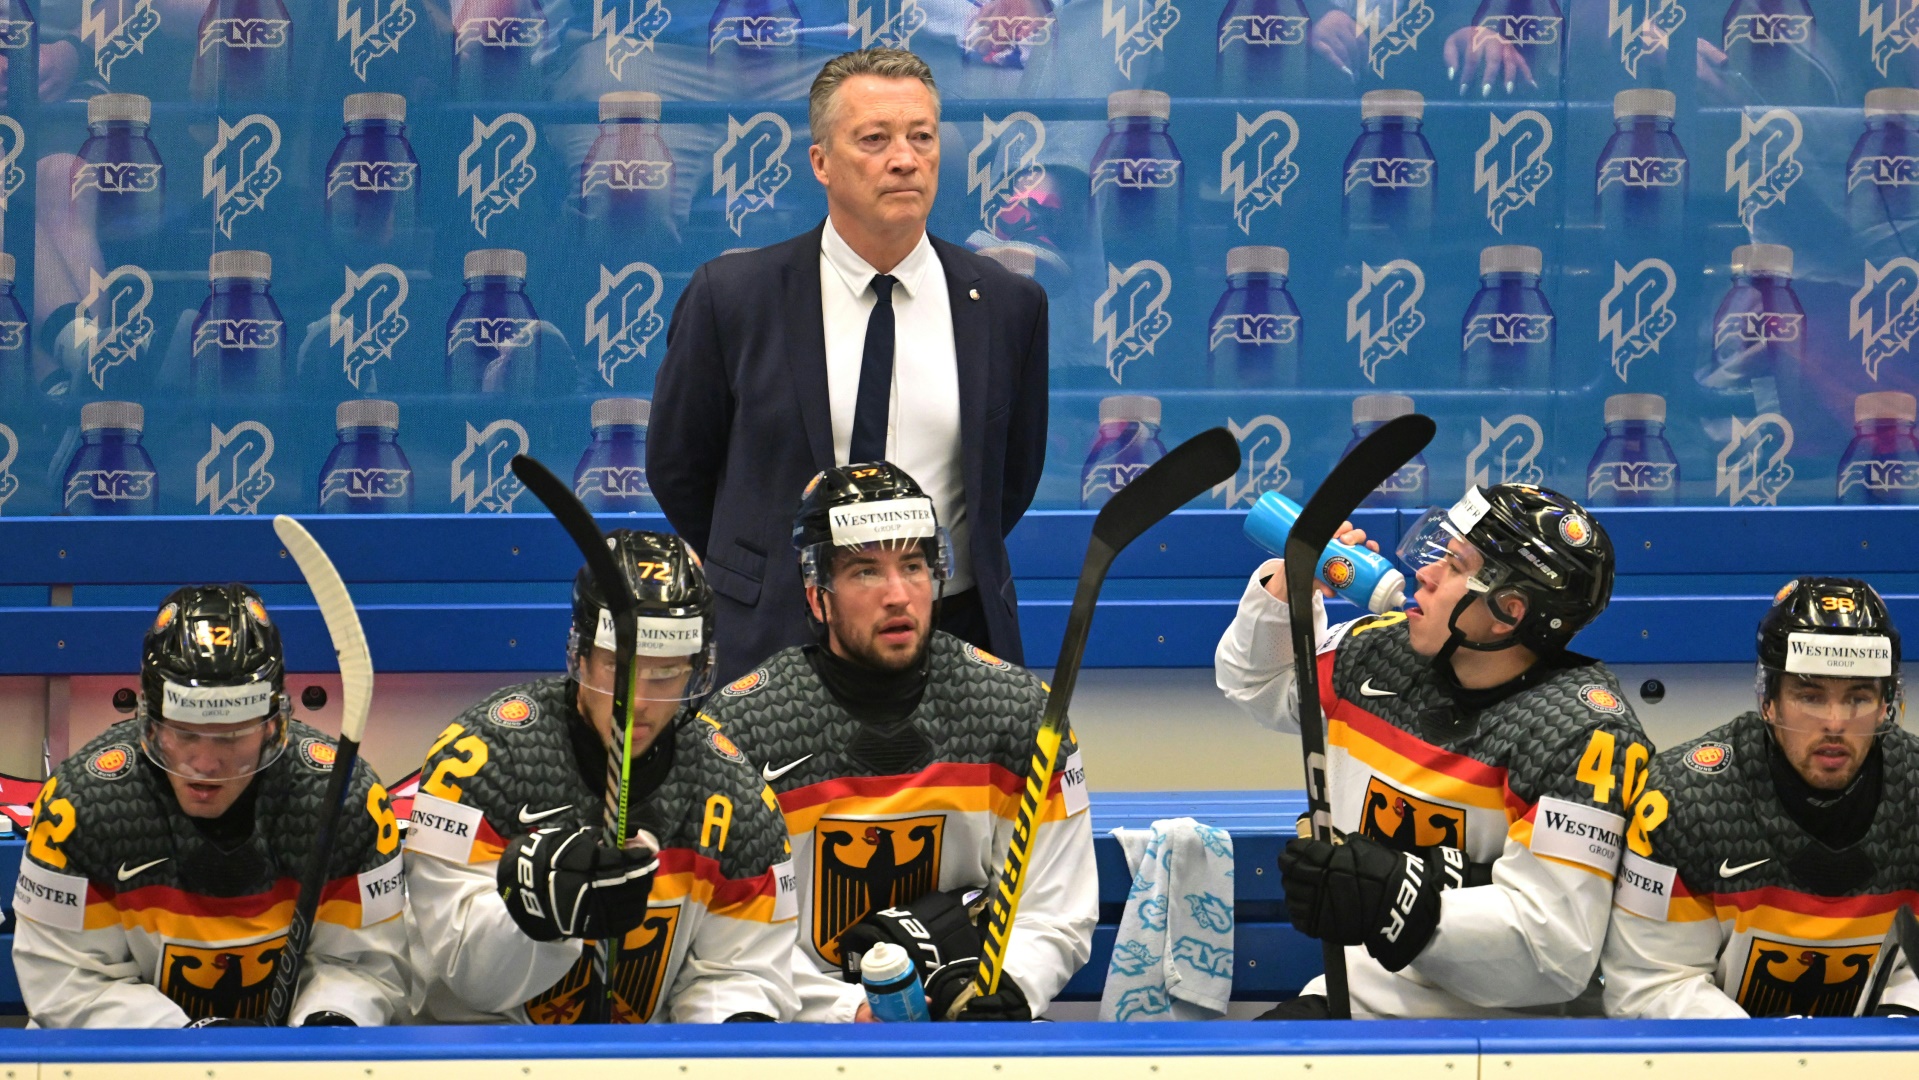 Eishockey-Bundestrainer Harold Kreis gefällt Country-Musik